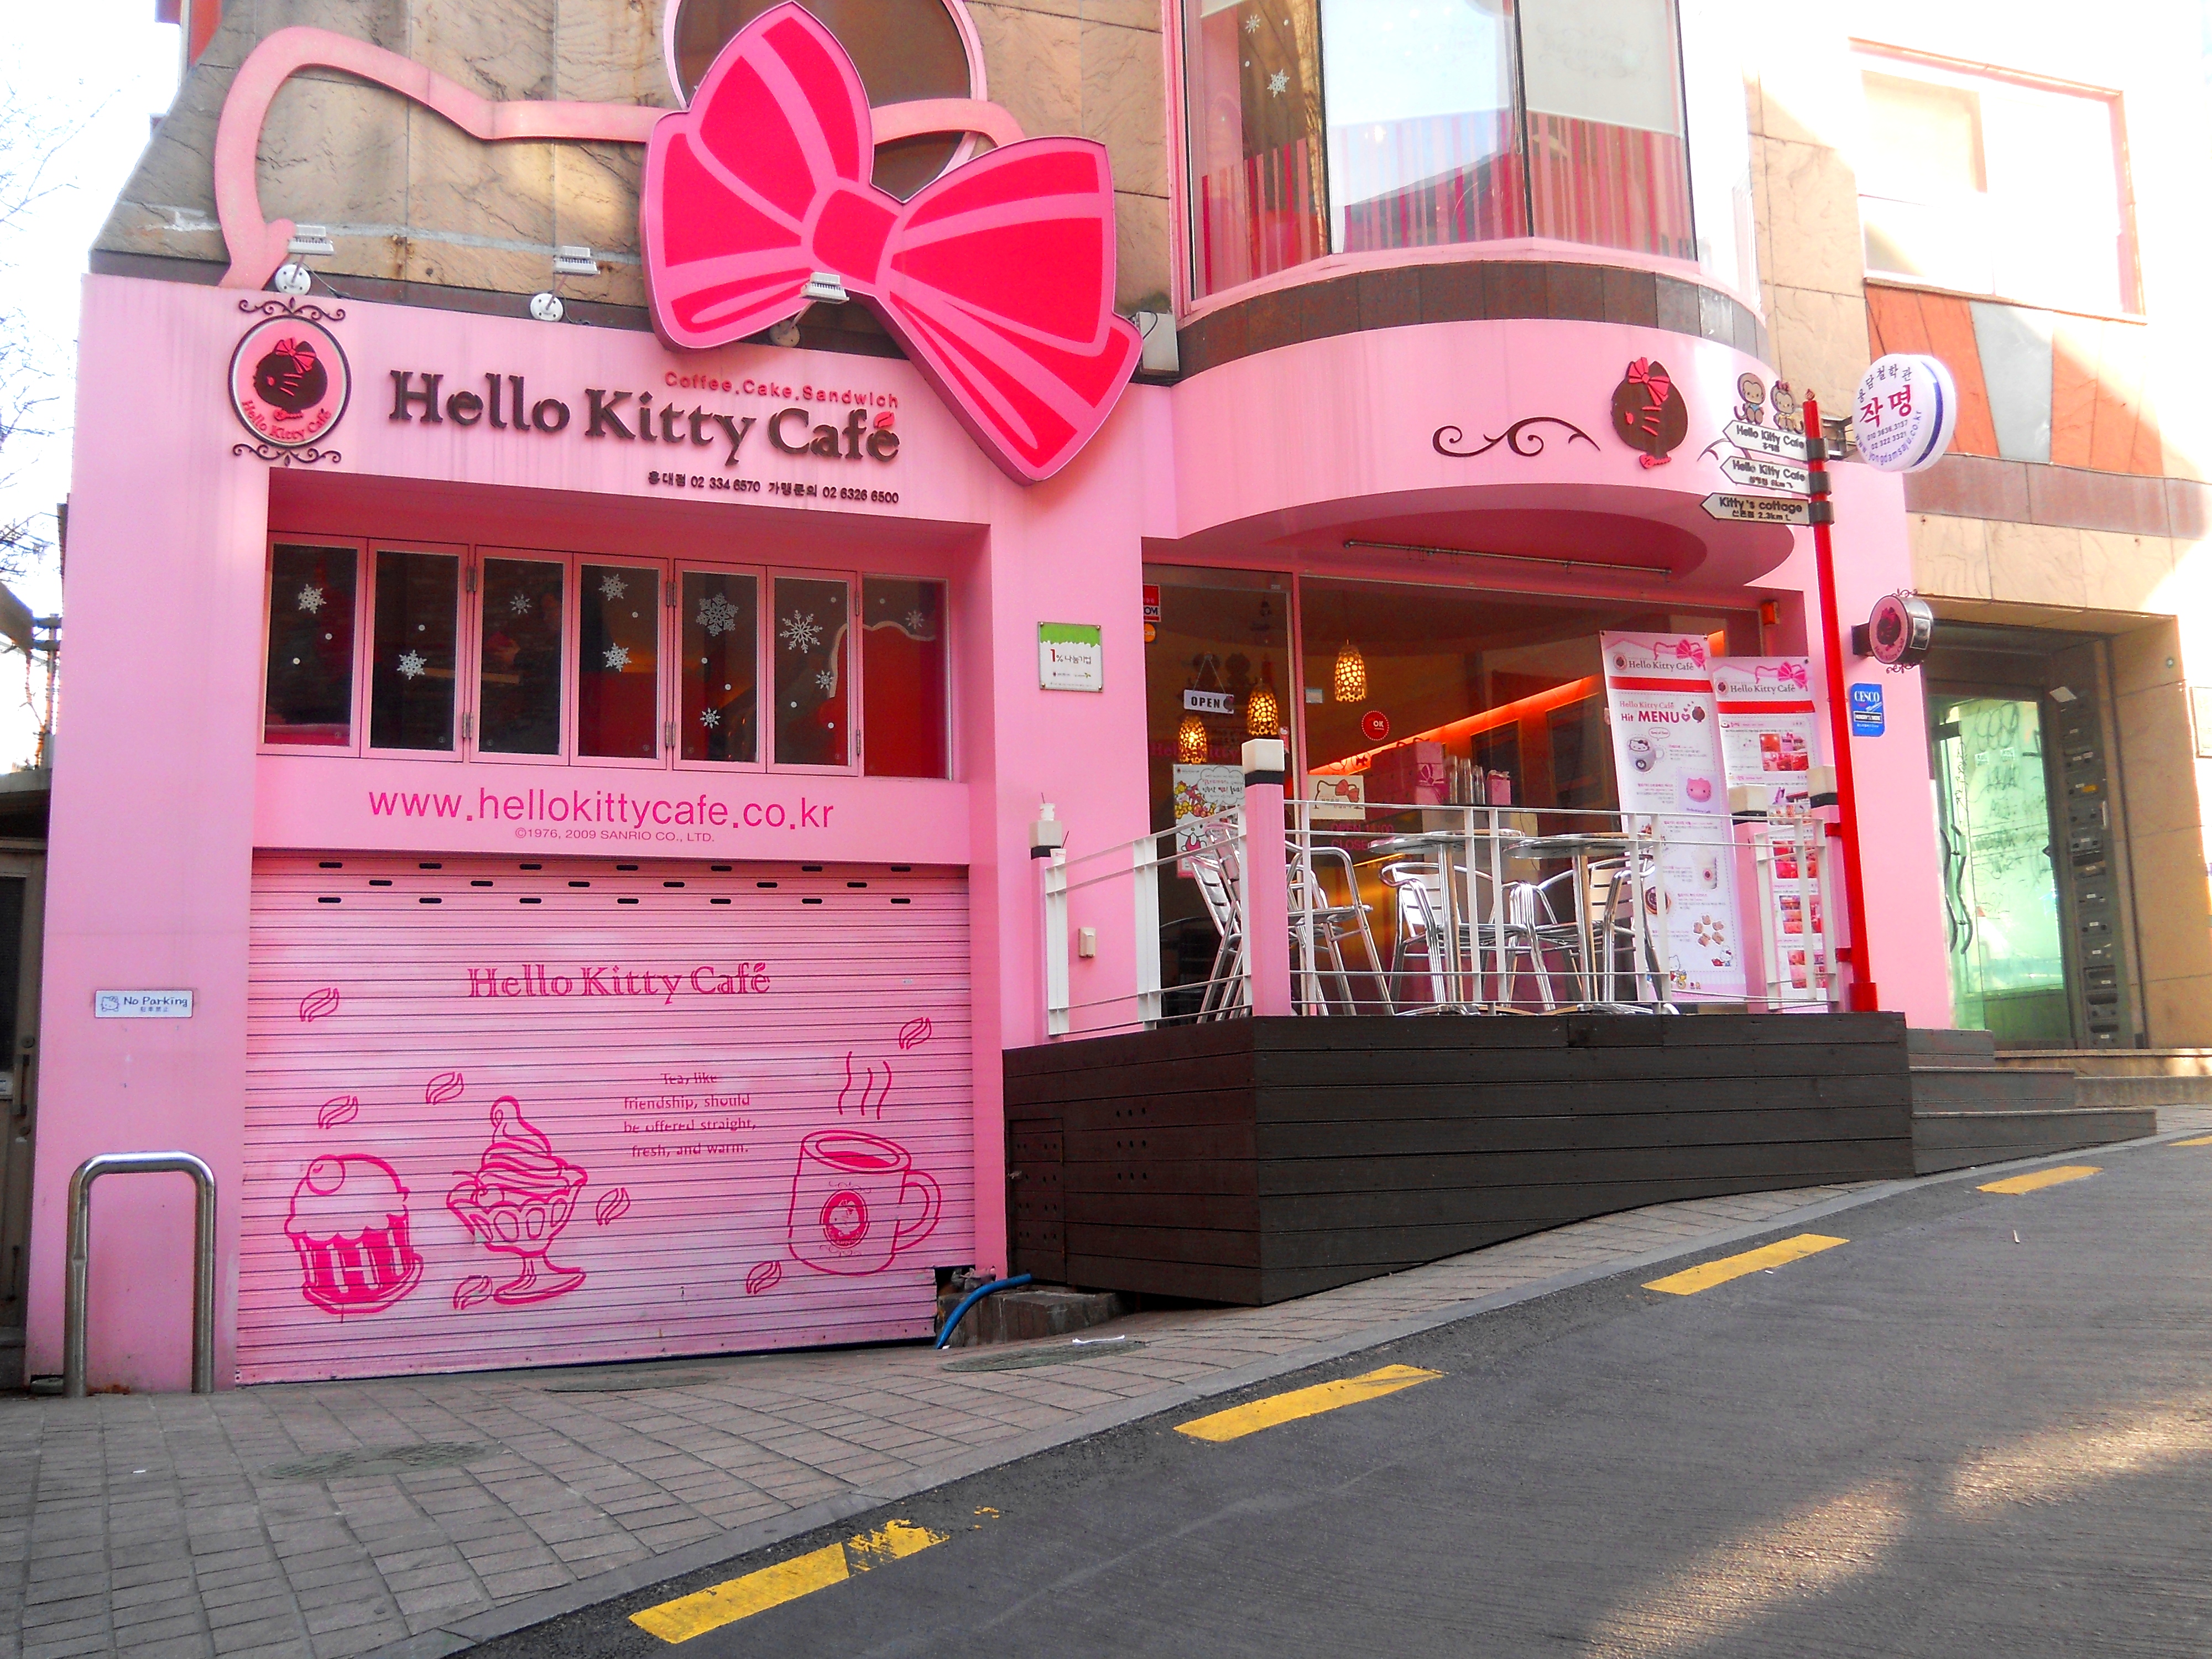  Hello Kitty Cafe  gypsy loves this city